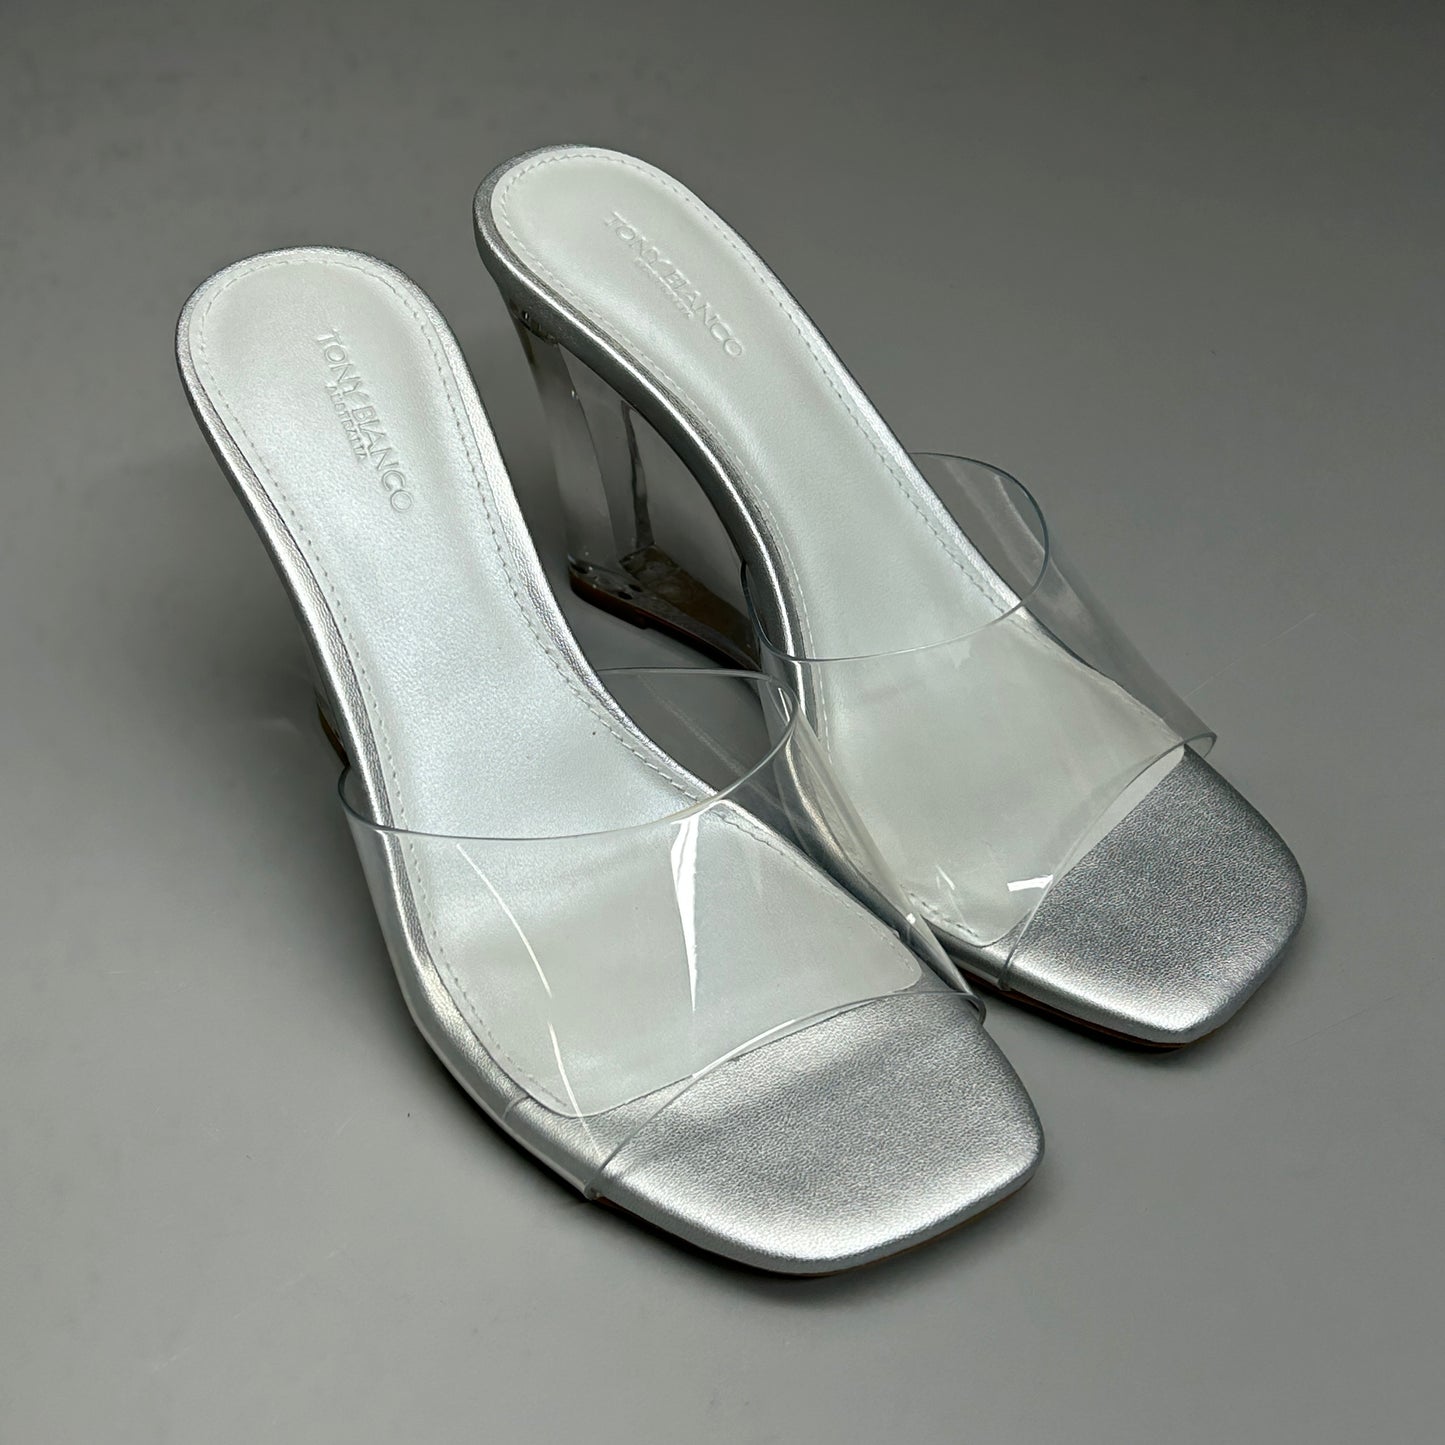 TONY BIANCO Alessi Clear Vinylite/Silver Wedges Women's Heels Sz 10 (New)